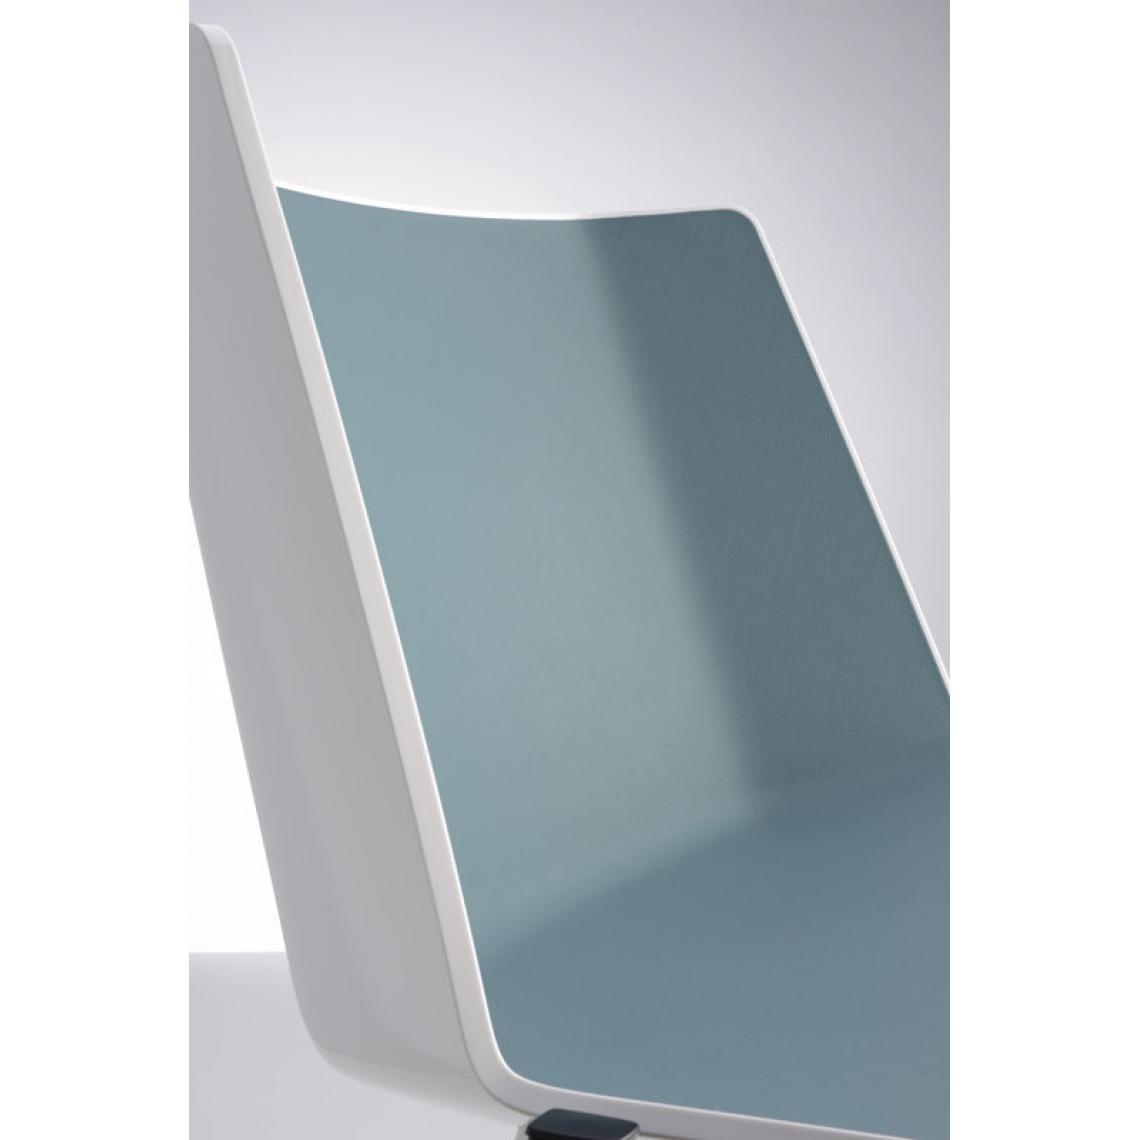 Mdf Italia - Chaise AÏKU - 4 pieds en forme de coin - blanc brillant/bleu moyen - blanc - Chaises